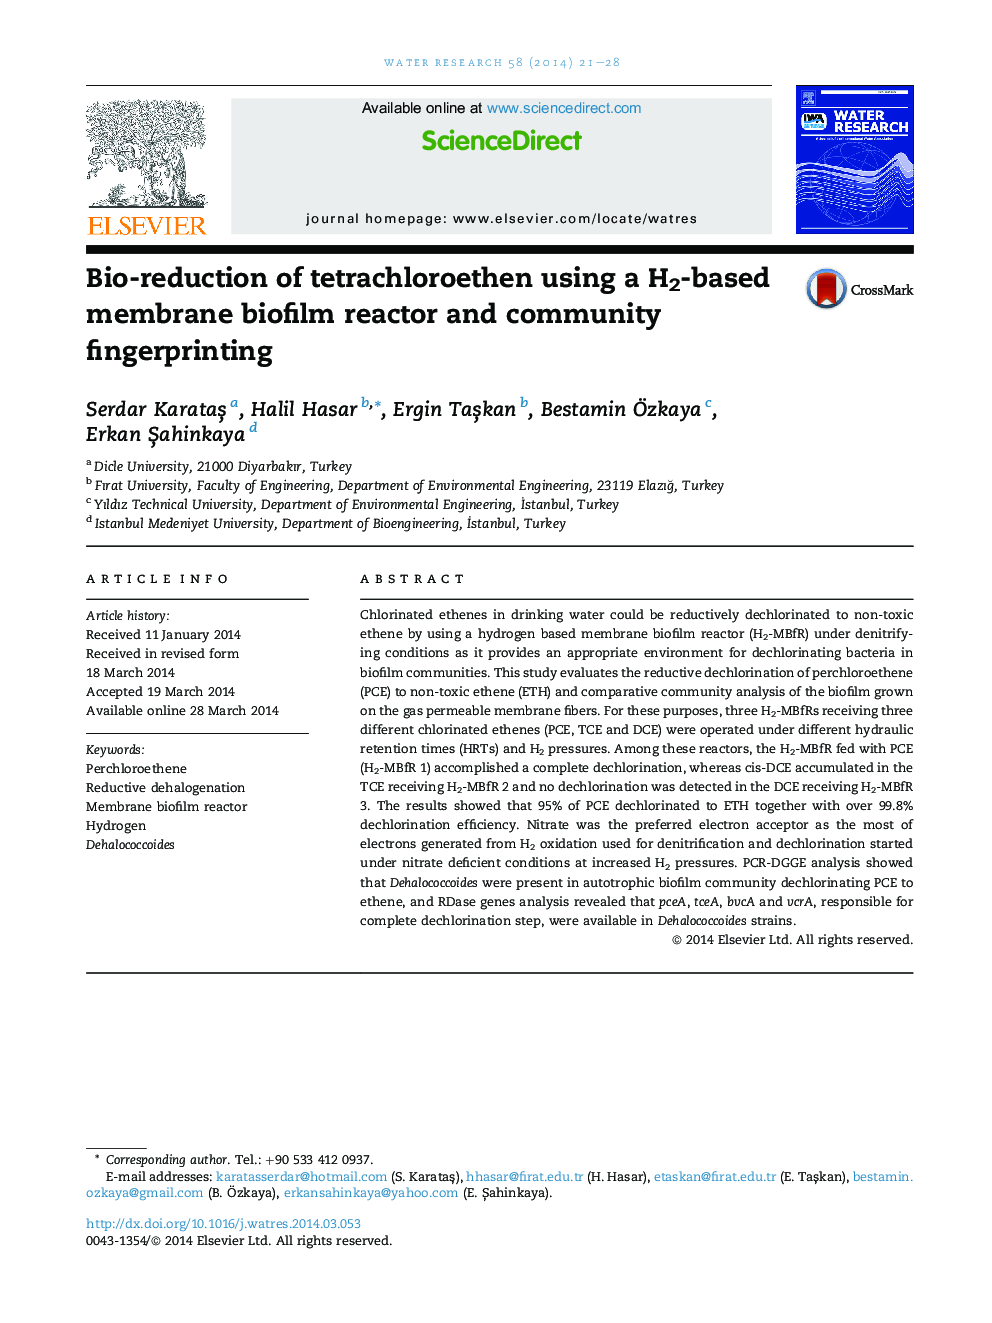 Bio-reduction of tetrachloroethen using a H2-based membrane biofilm reactor and community fingerprinting